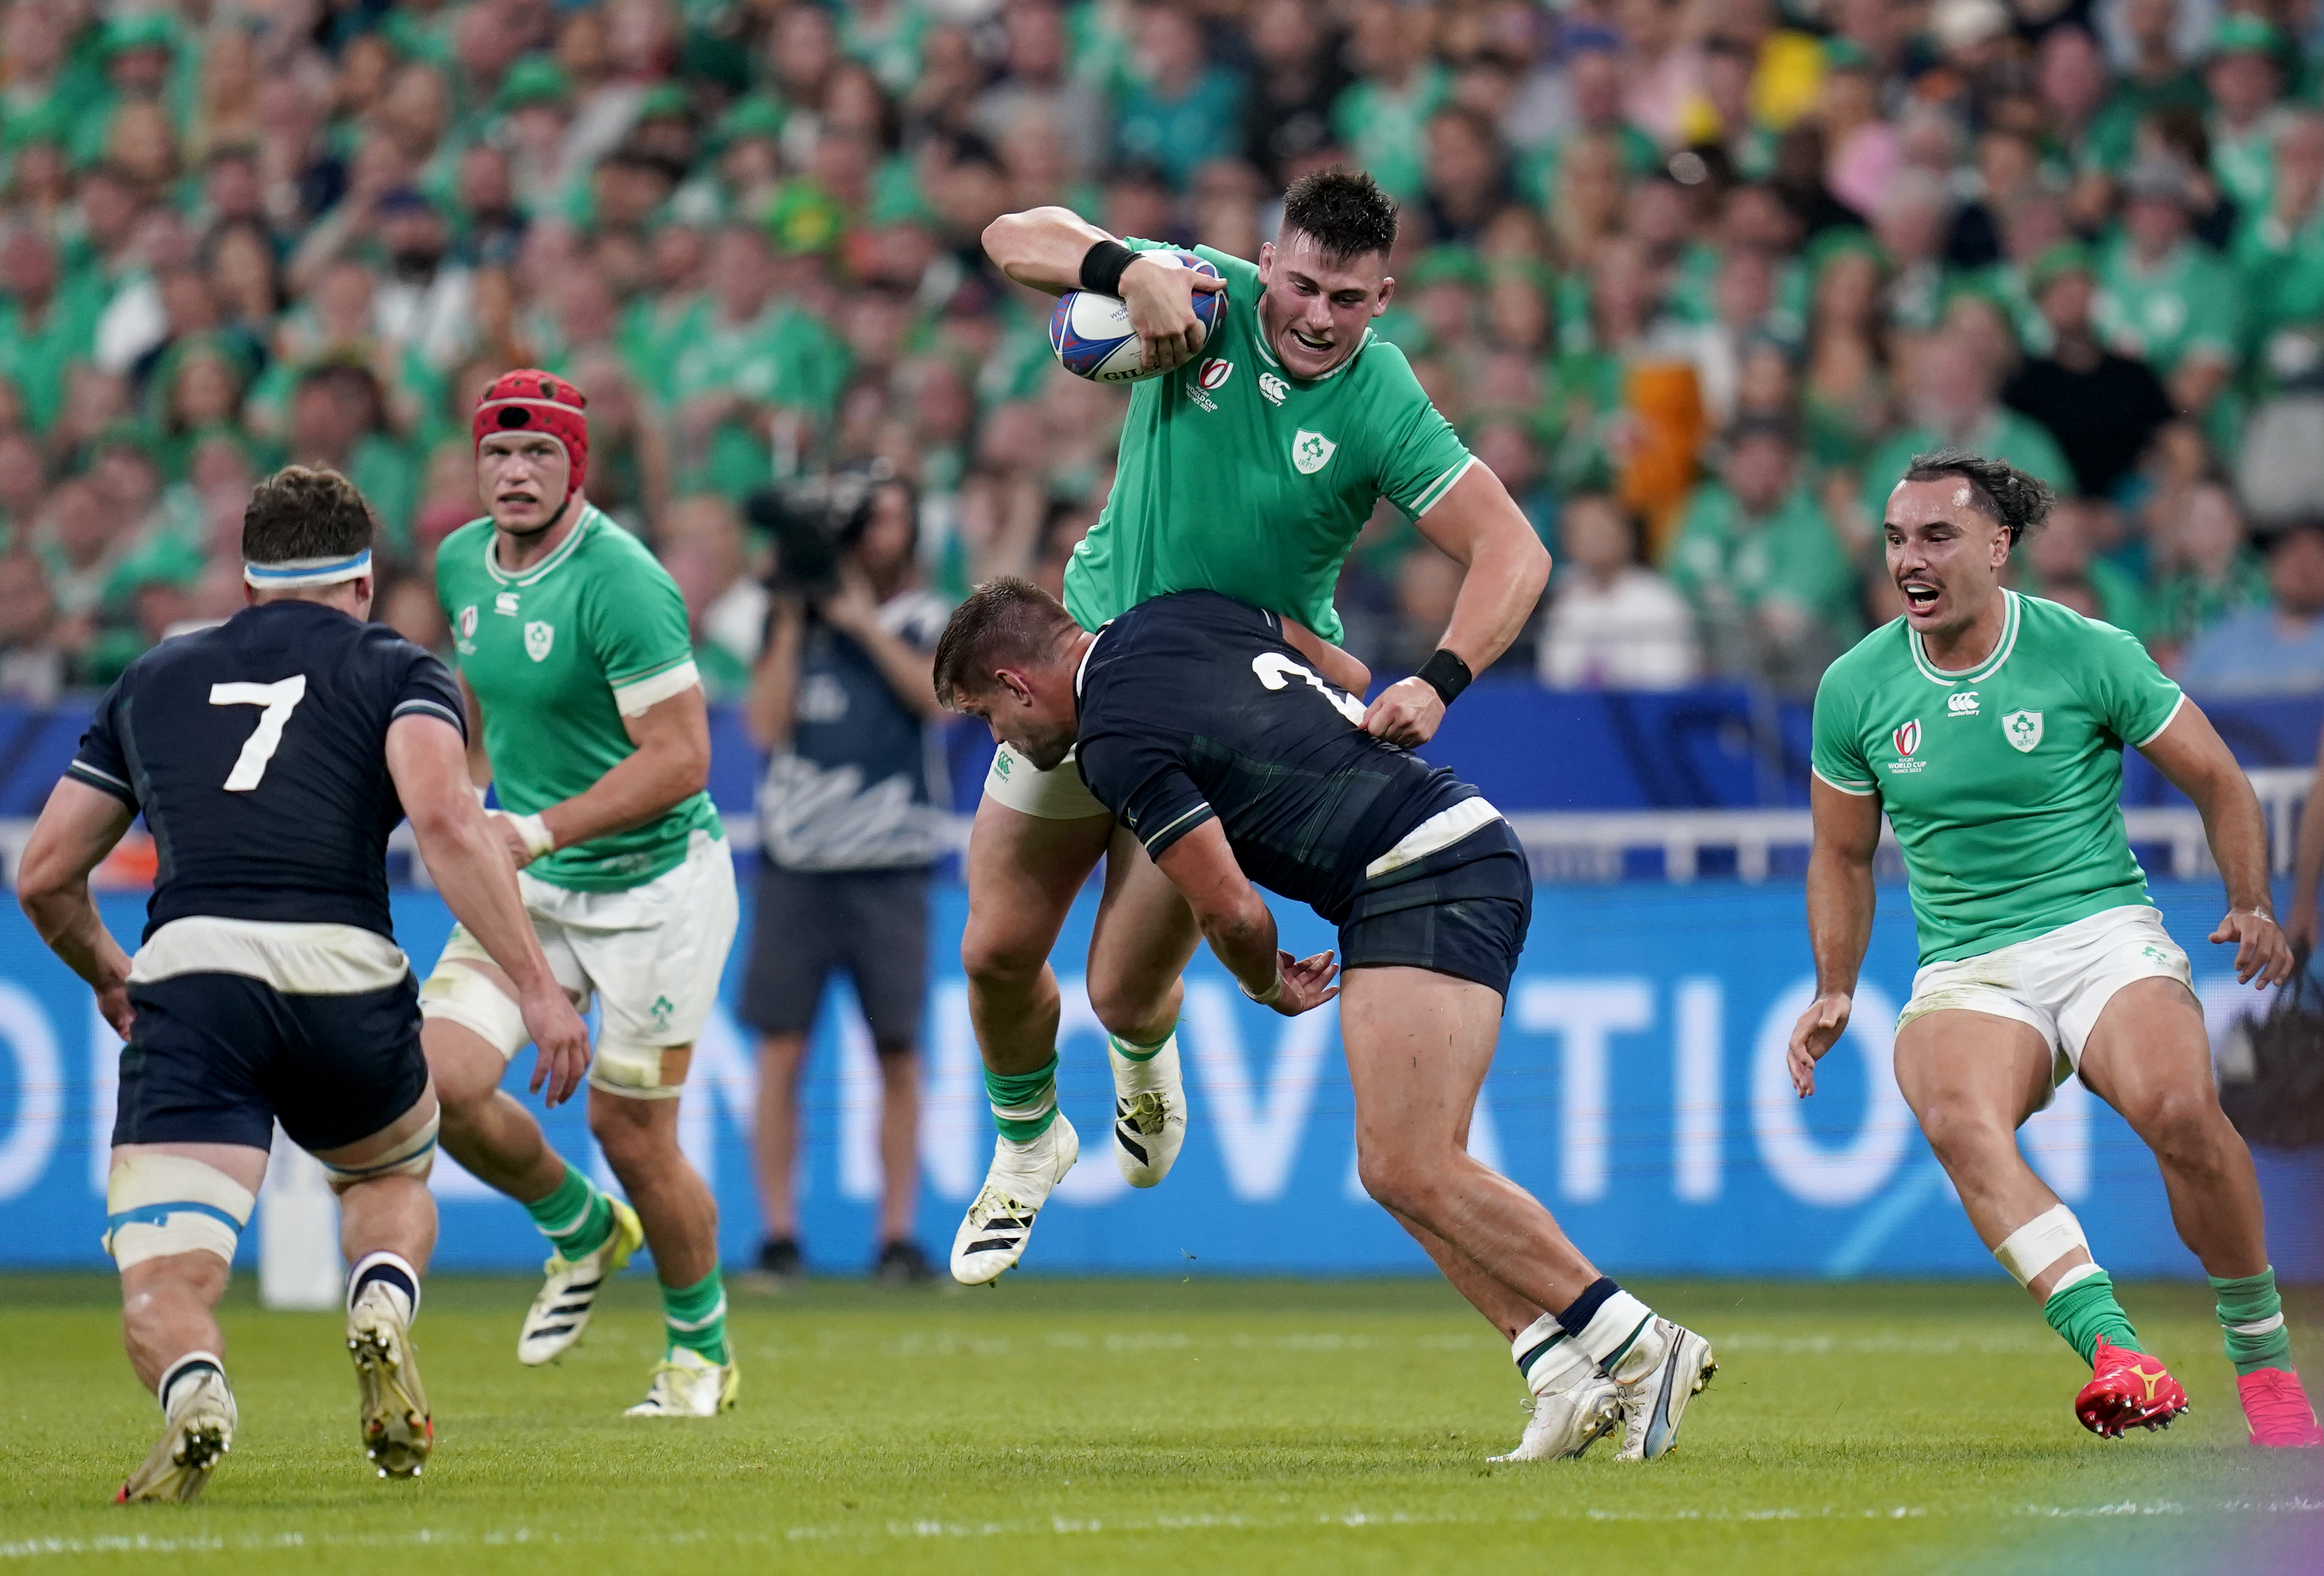 Dan Sheehan, with ball, has surpassed Ronan Kelleher as Ireland's first choice hooker